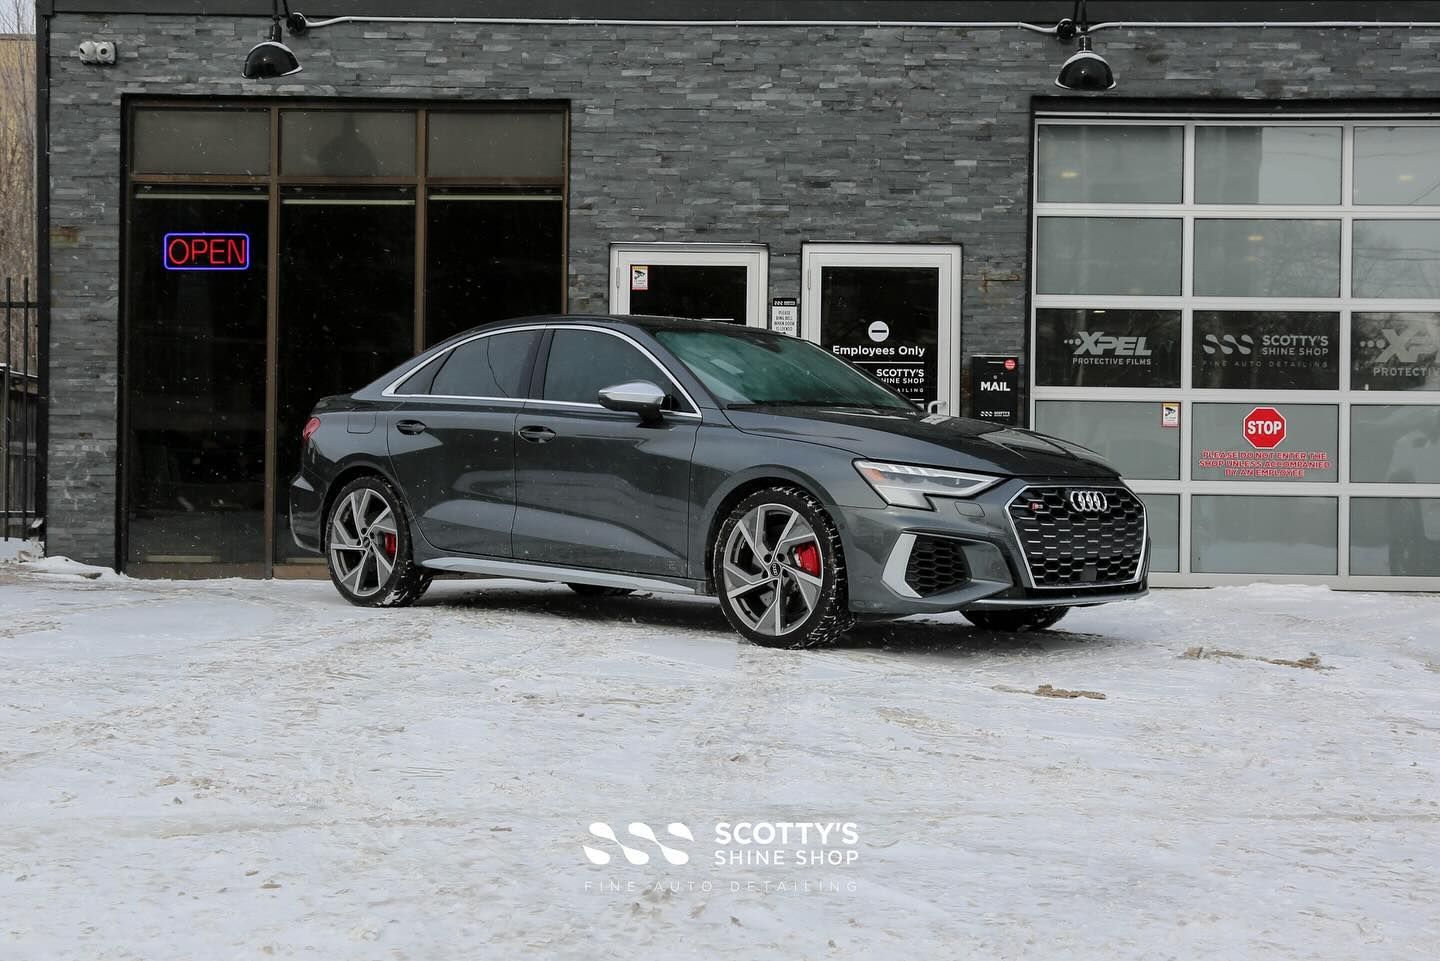 2022 Audi S3 Xpel Prime CS Window Tint London, Canada